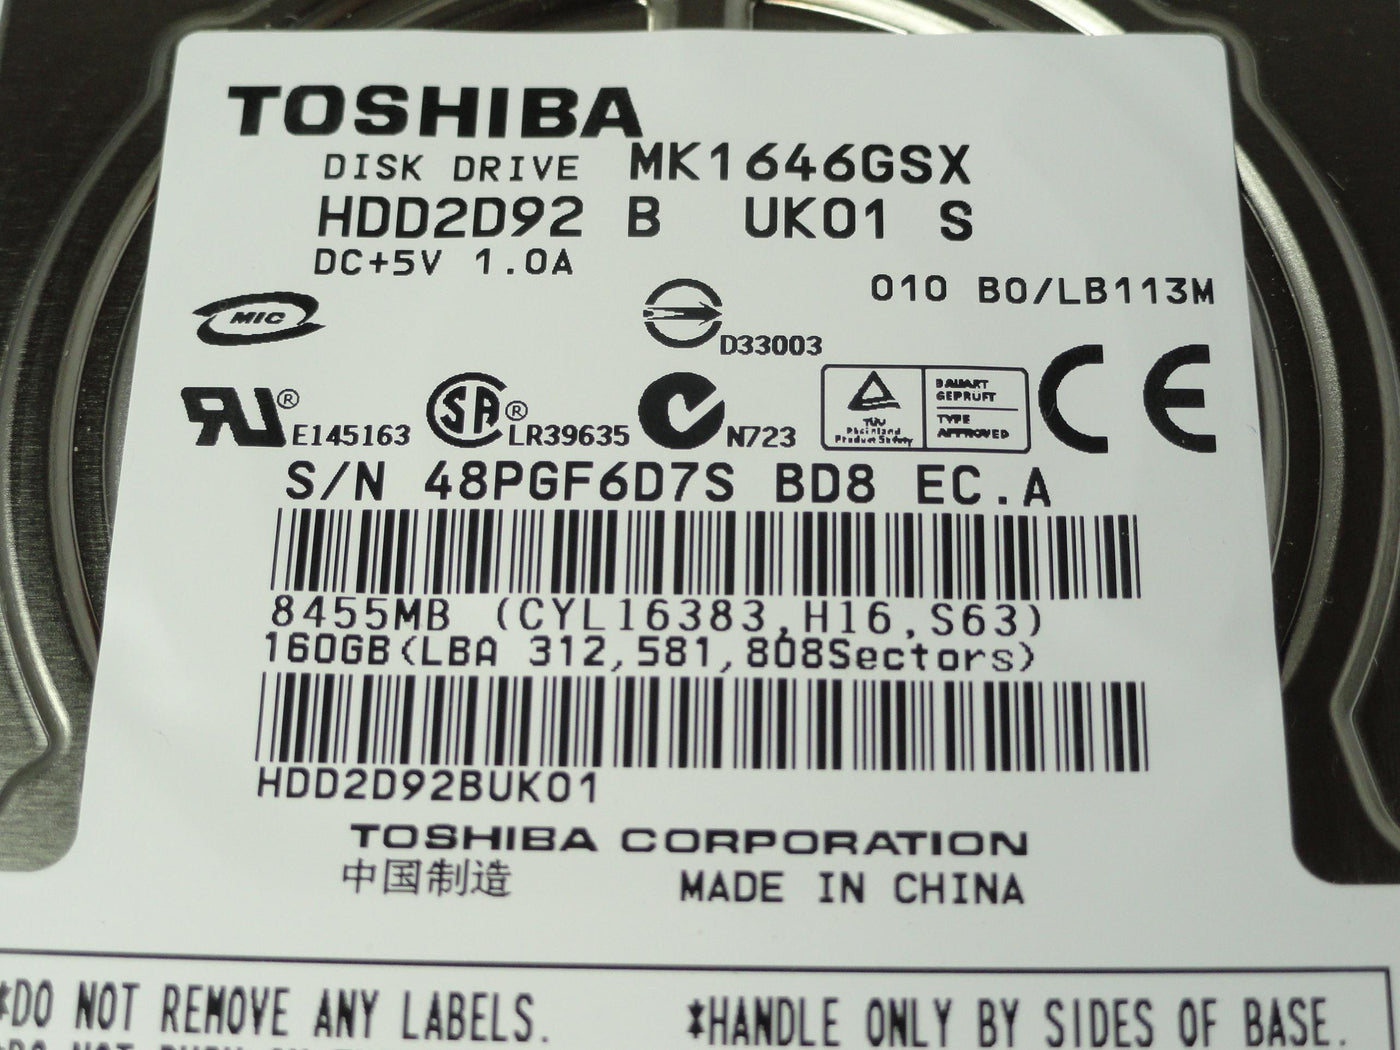 HDD2D92 - Toshiba 160Gb SATA 5400rpm 2.5in HDD - Refurbished